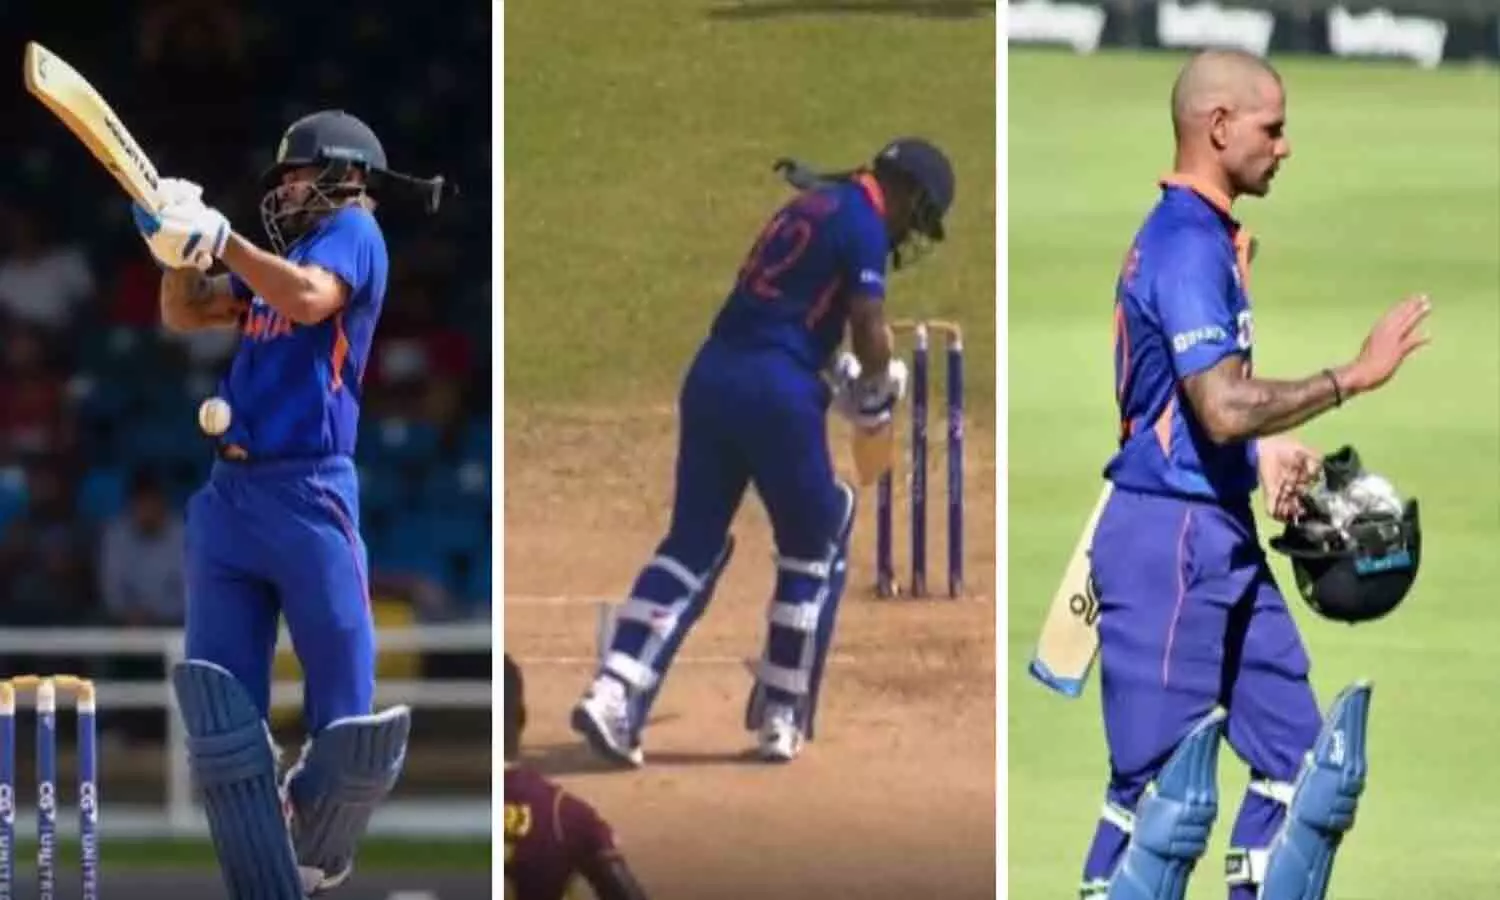 IND vs WI 2nd ODI